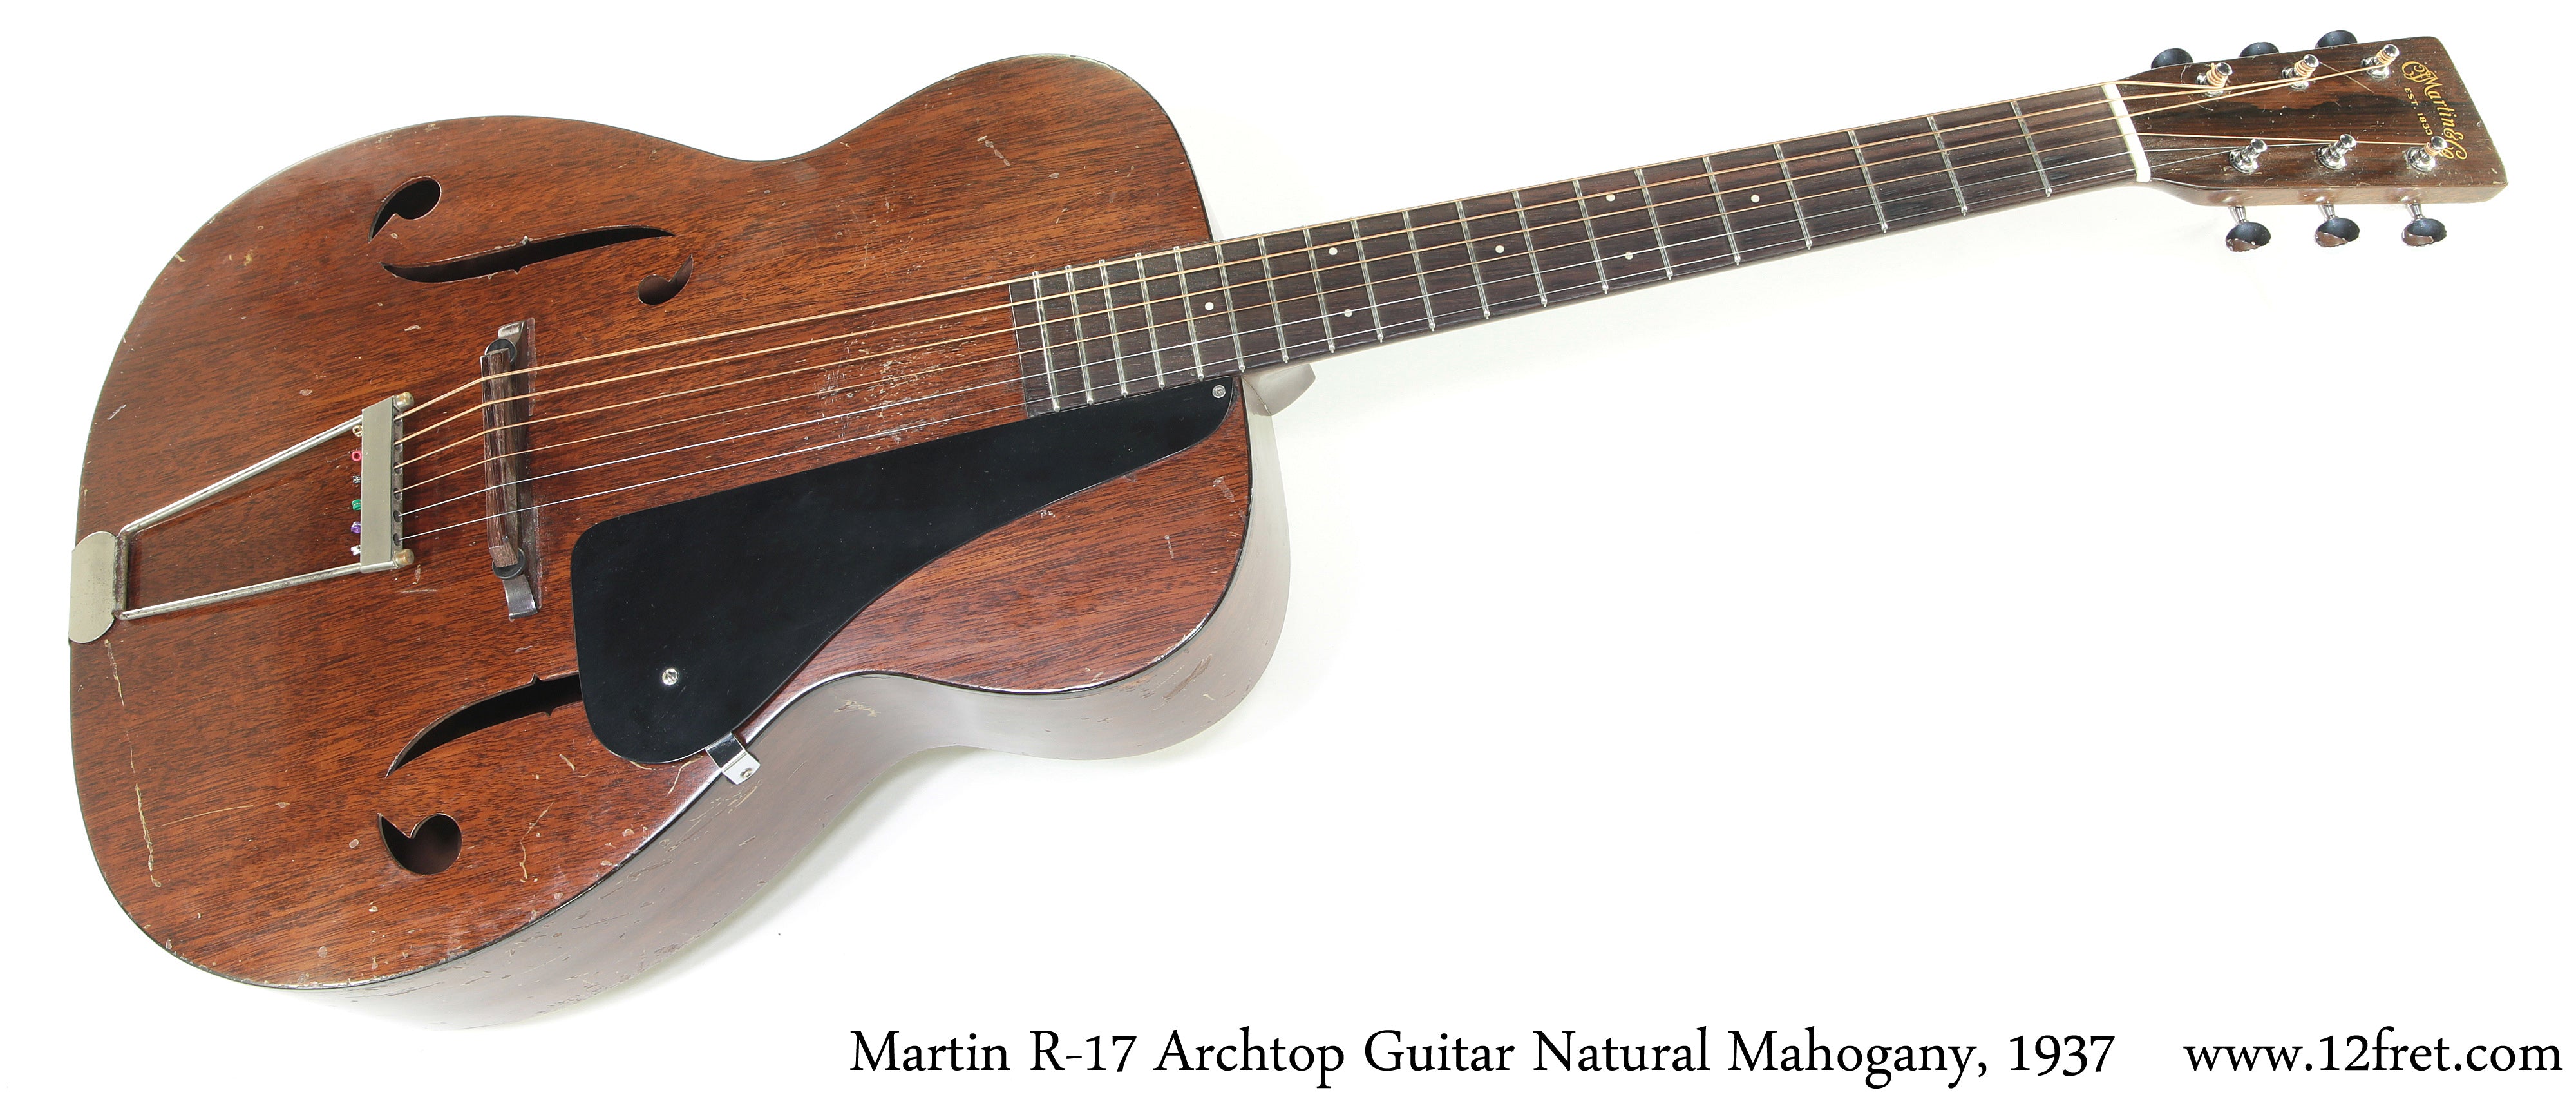 Martin R-17 Archtop Guitar Natural Mahogany, 1937 - The Twelfth Fret